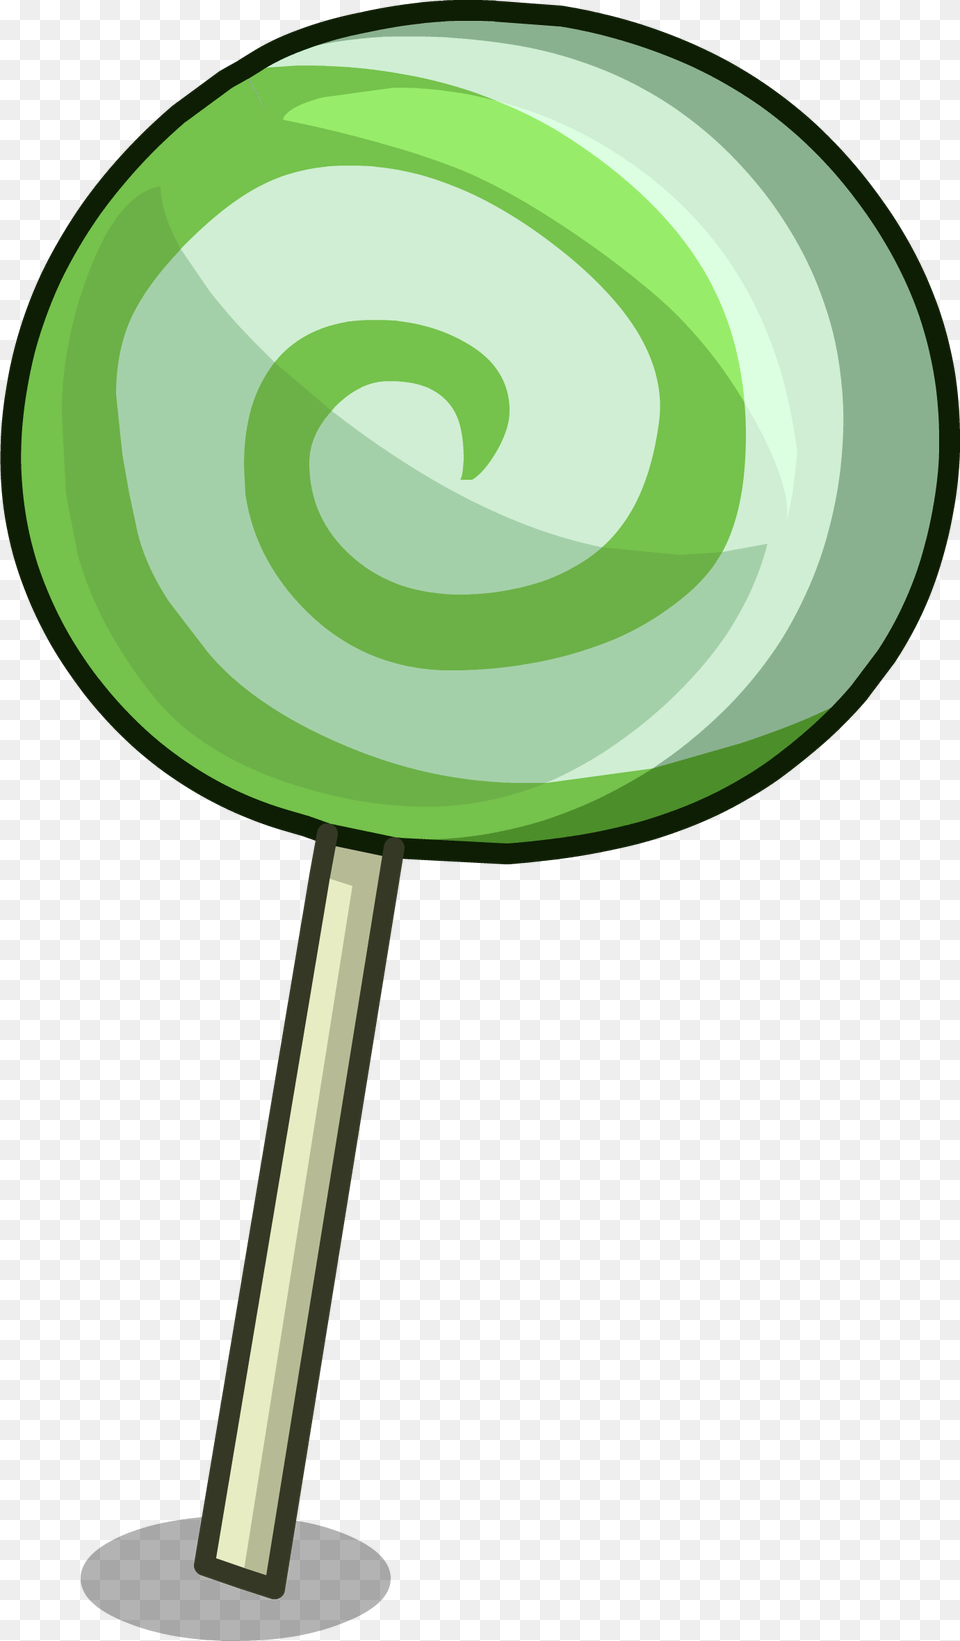 Swirly Lollipop Sprite 004 Lembaga Perindustrian Nanas Malaysia, Candy, Food, Sweets Free Png